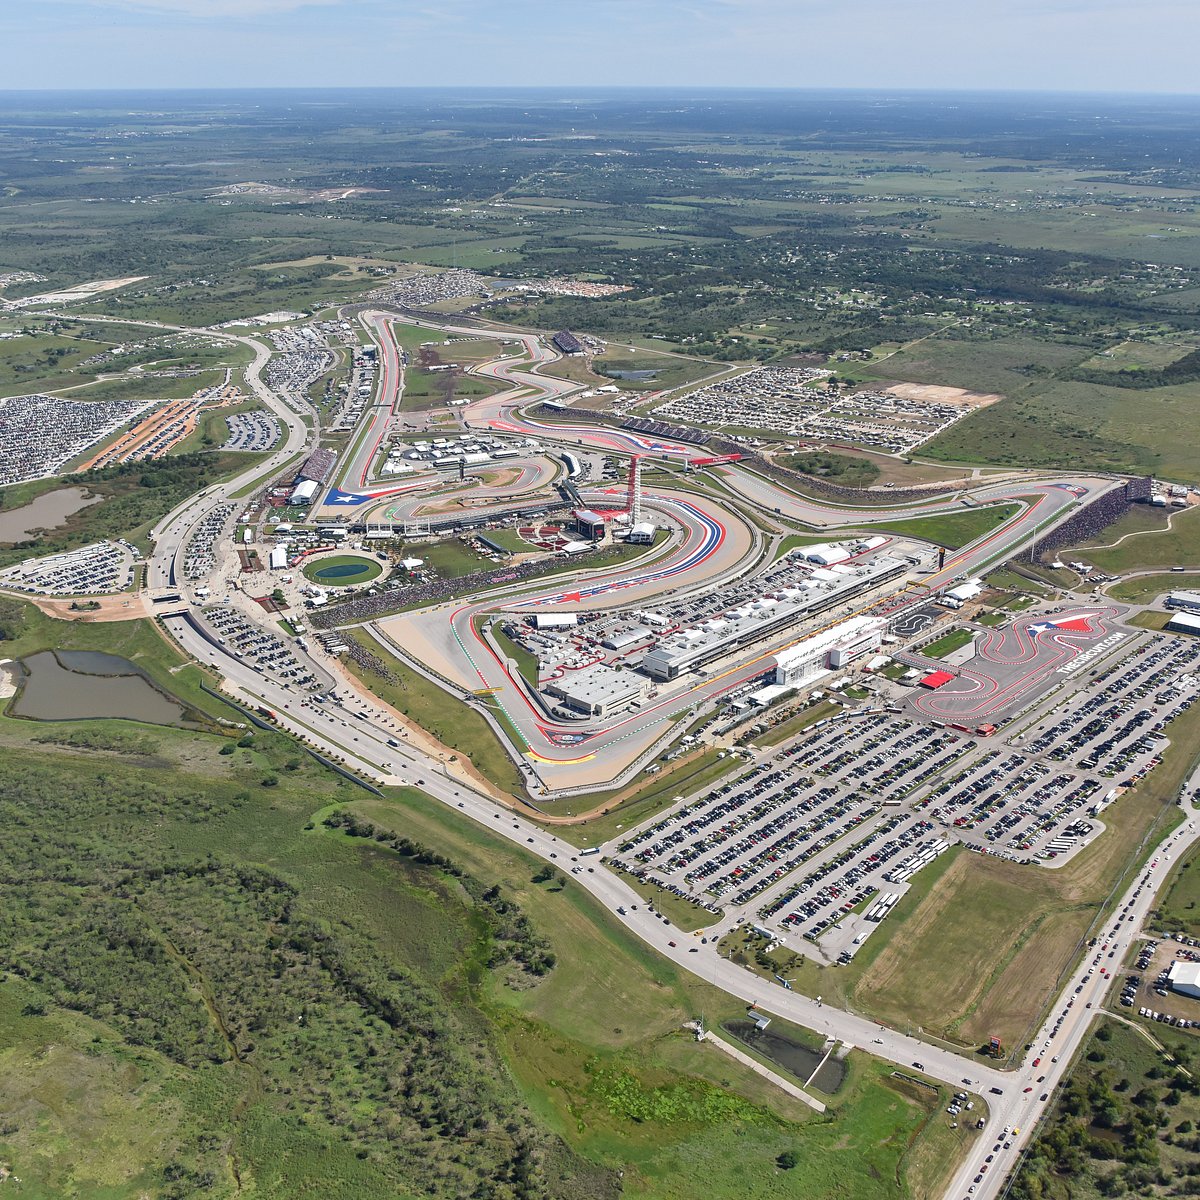 COTA Karting - Premier Karting Destination in Texas at The Circuit